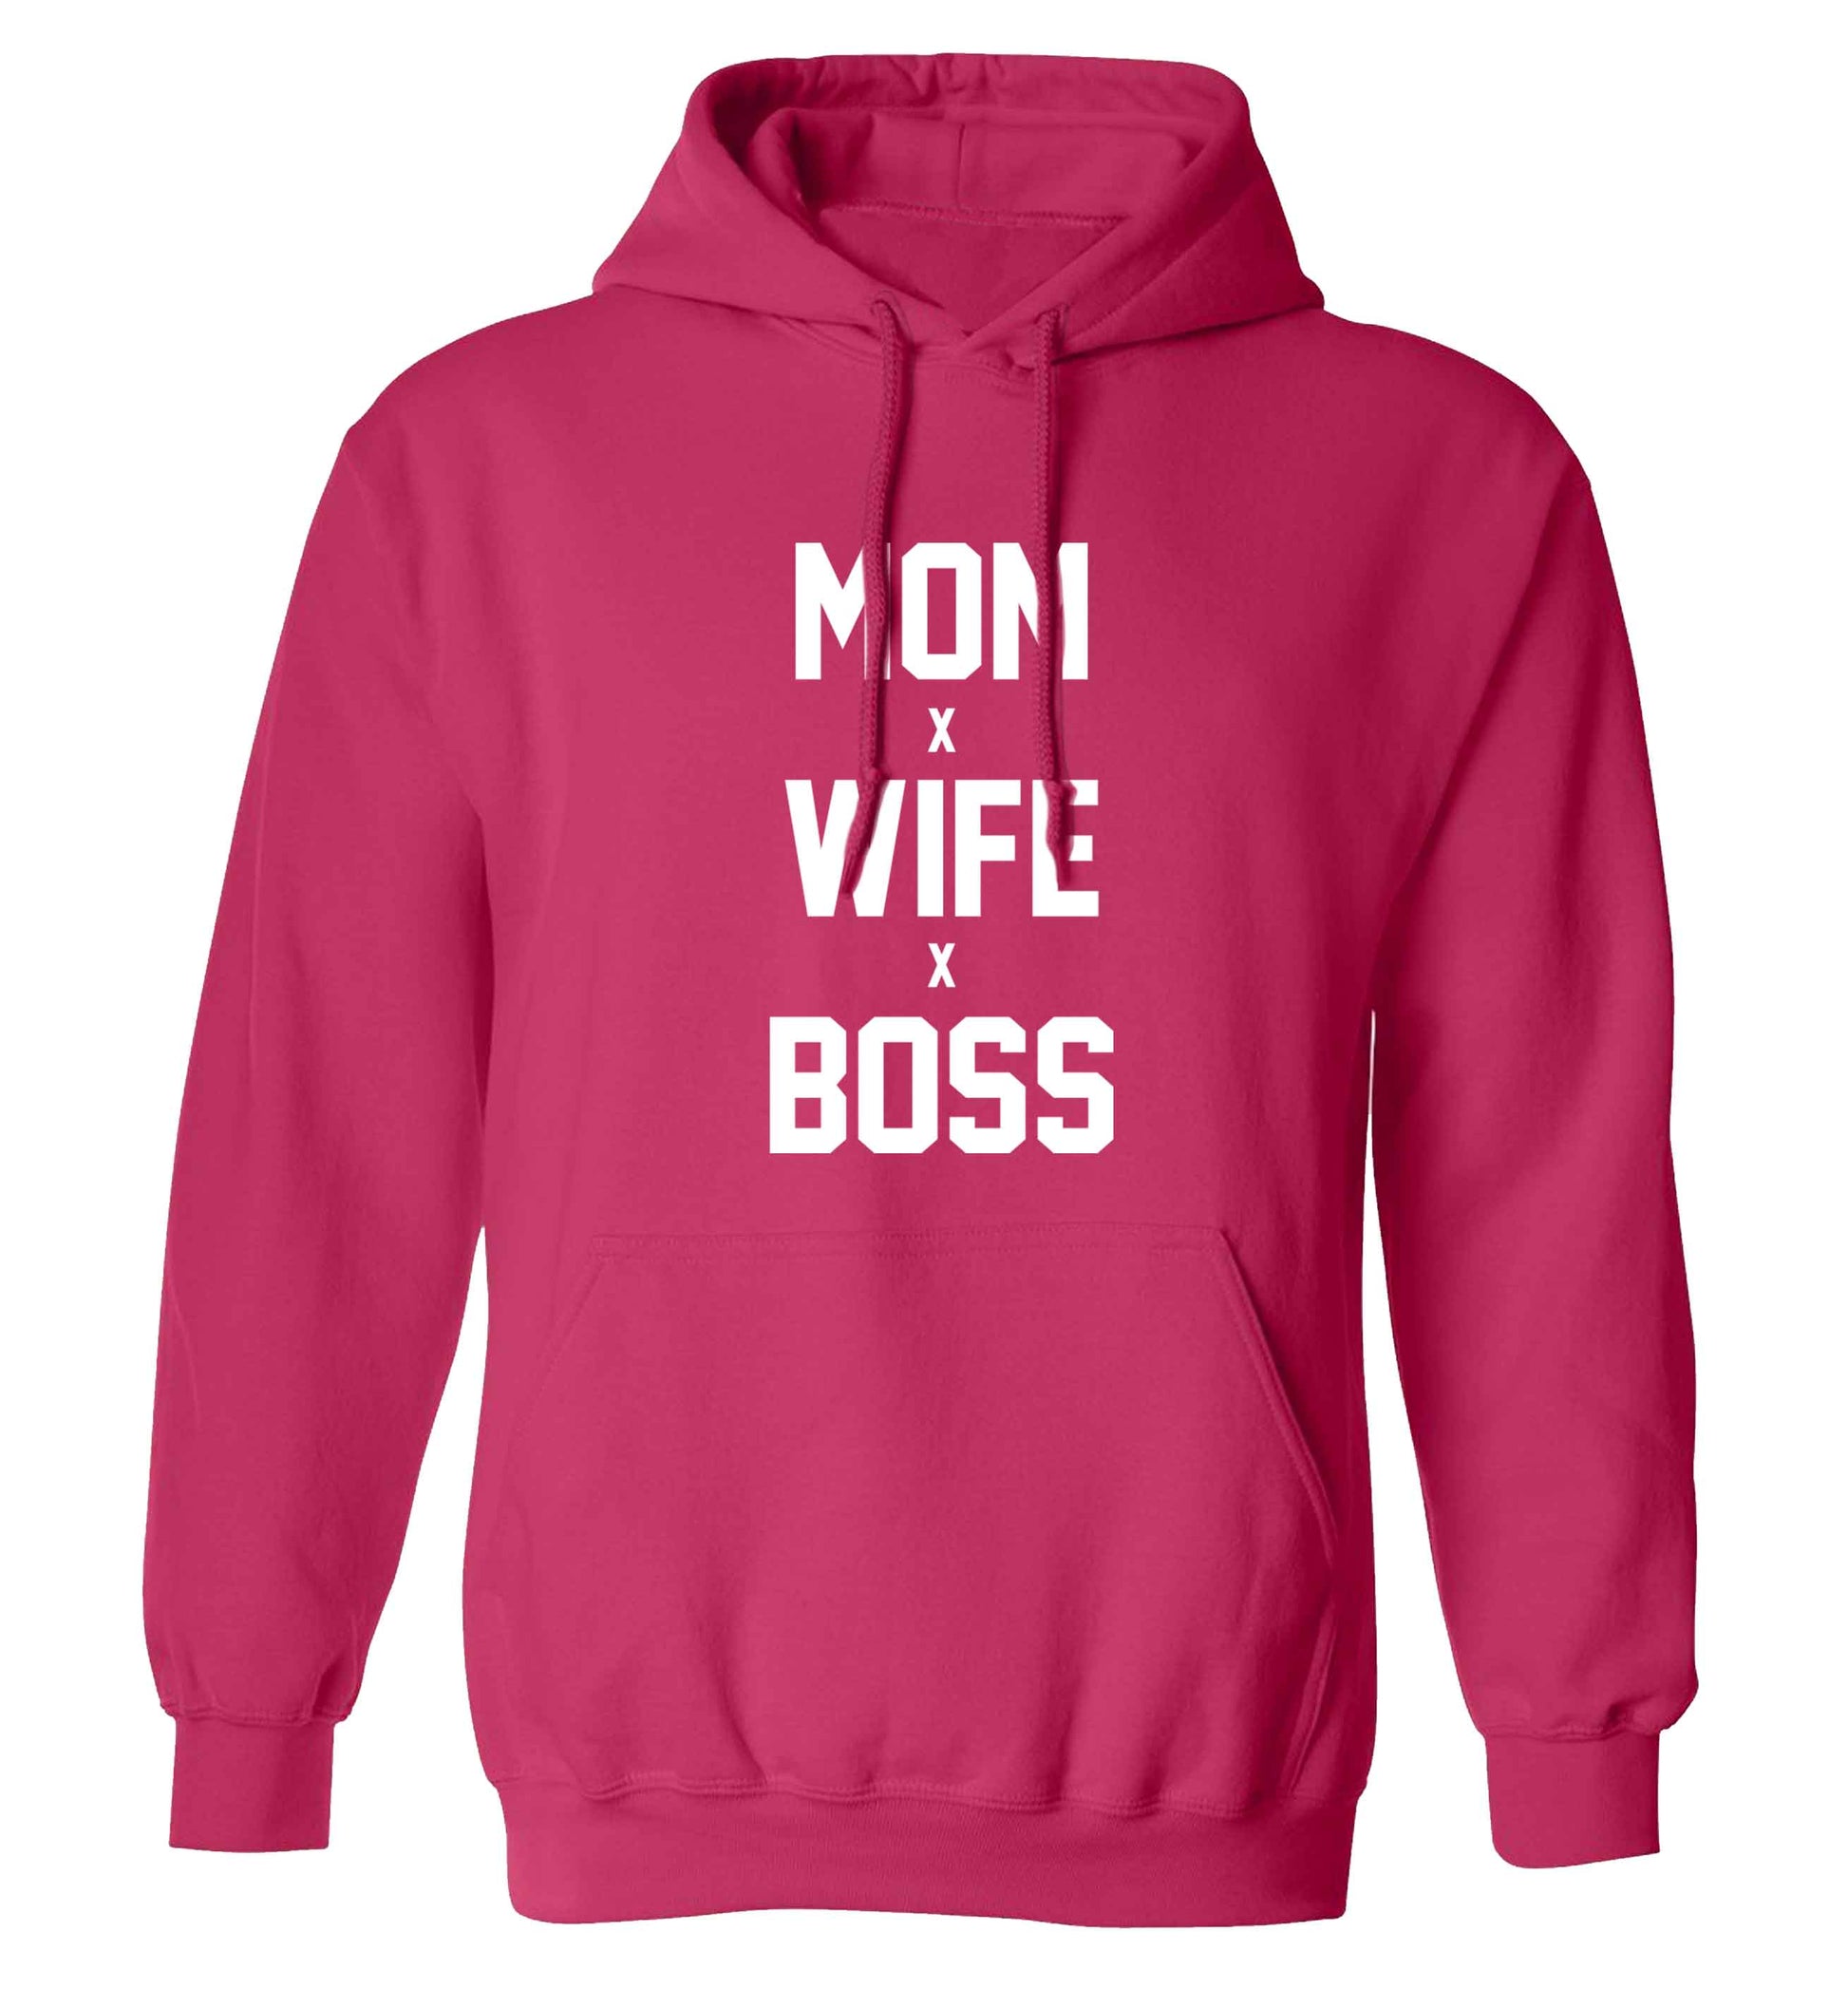 Mum wife boss adults unisex pink hoodie 2XL